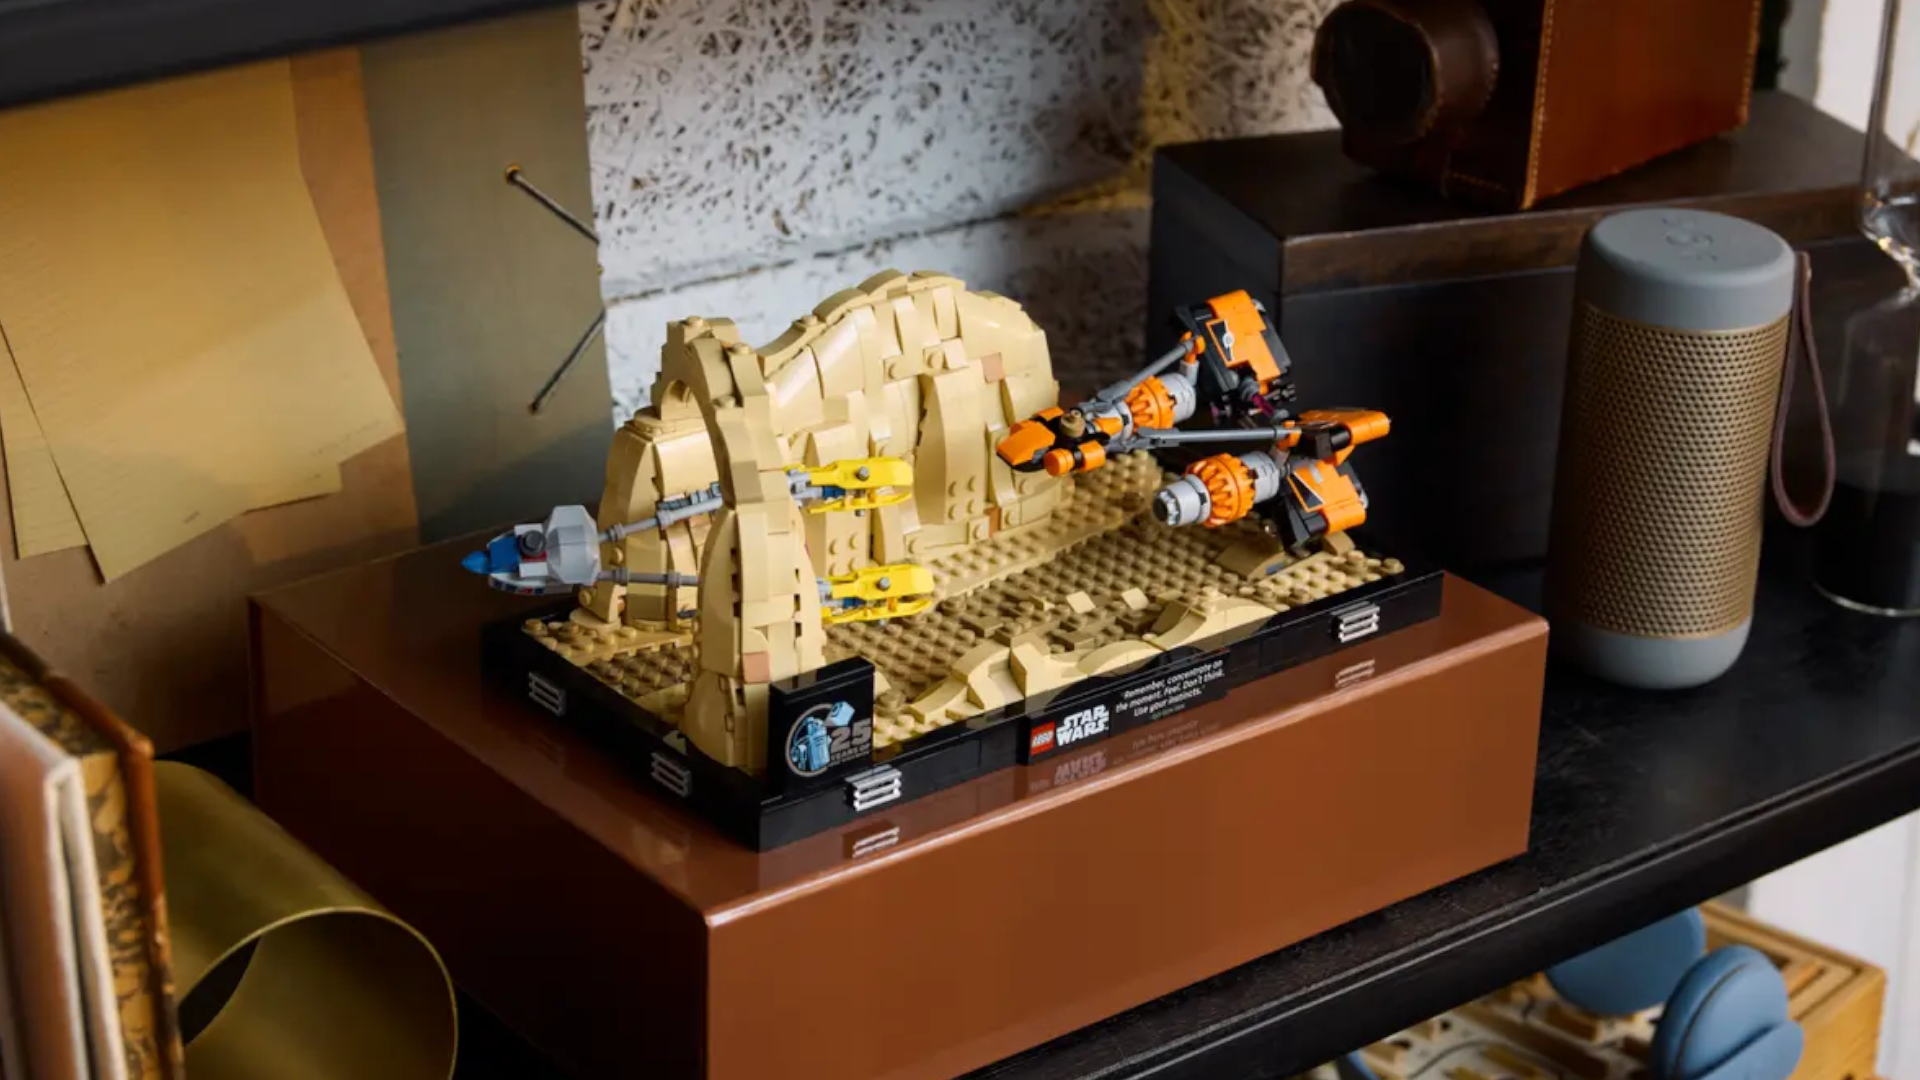 Lego Mos Espa Podrace Diorama set